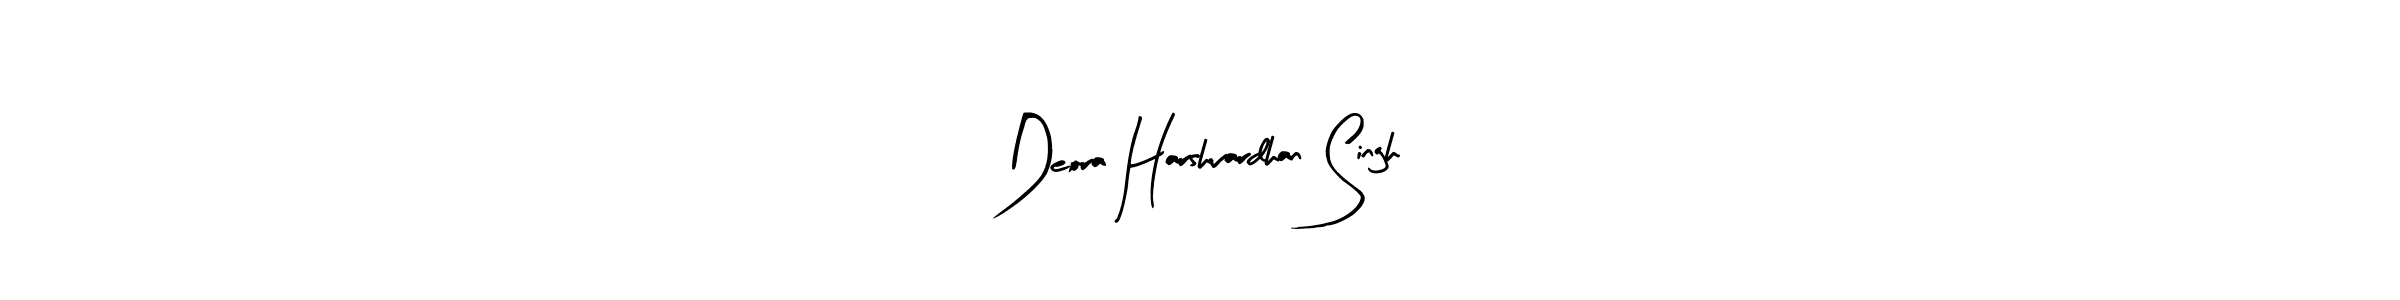 Deora Harshvardhan Singh stylish signature style. Best Handwritten Sign (Arty Signature) for my name. Handwritten Signature Collection Ideas for my name Deora Harshvardhan Singh. Deora Harshvardhan Singh signature style 8 images and pictures png